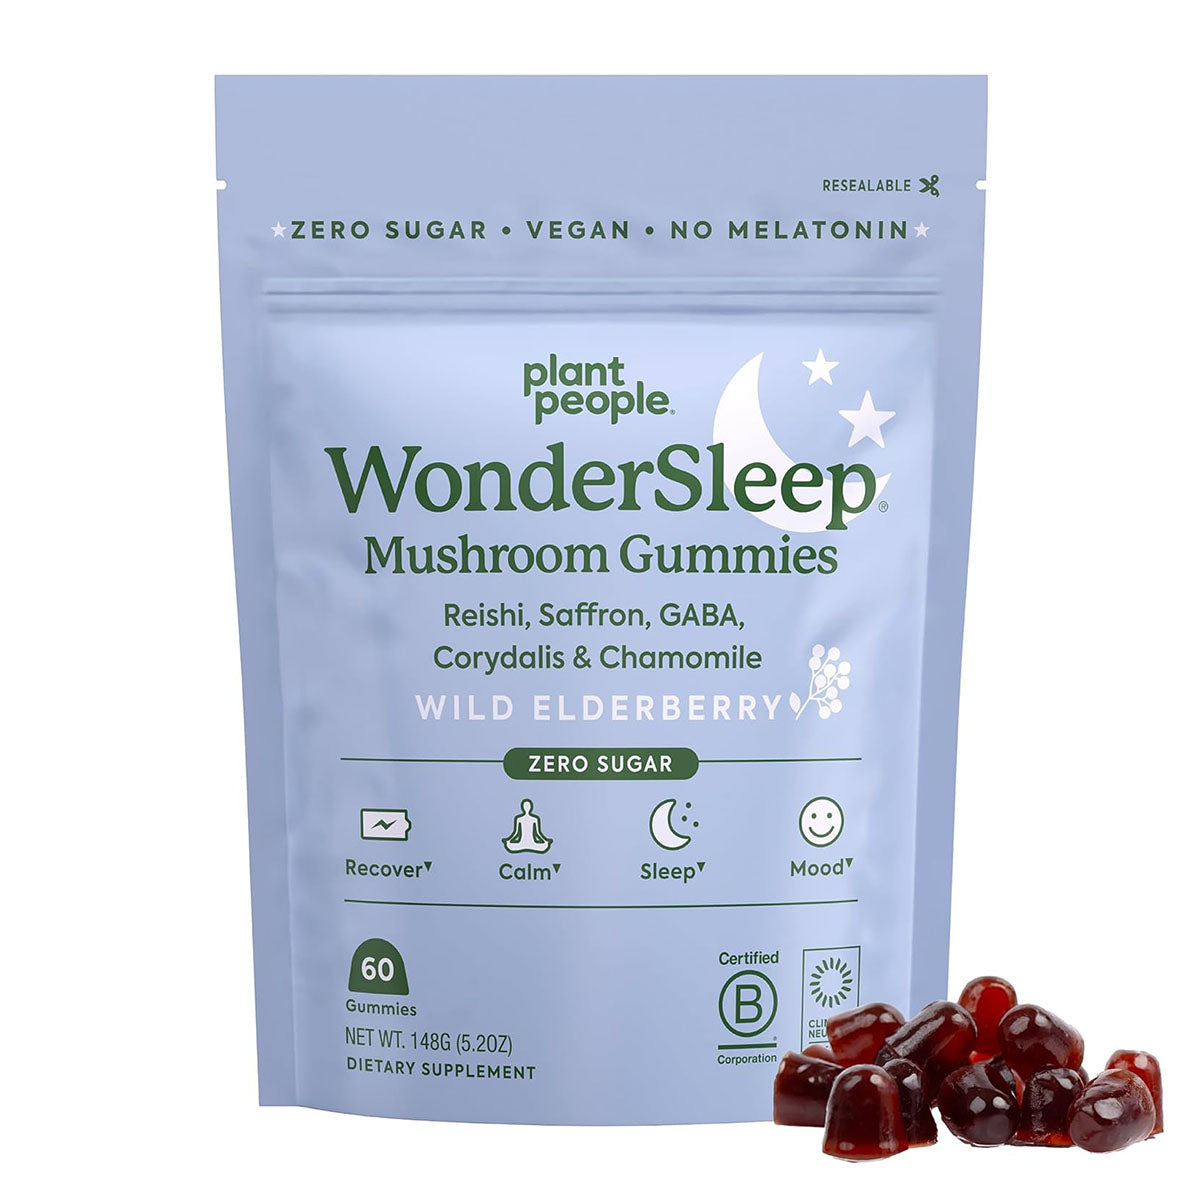 A bag of Plant People WonderSleep mushroom gummies, with more than a dozen reddish gummies piled in front.